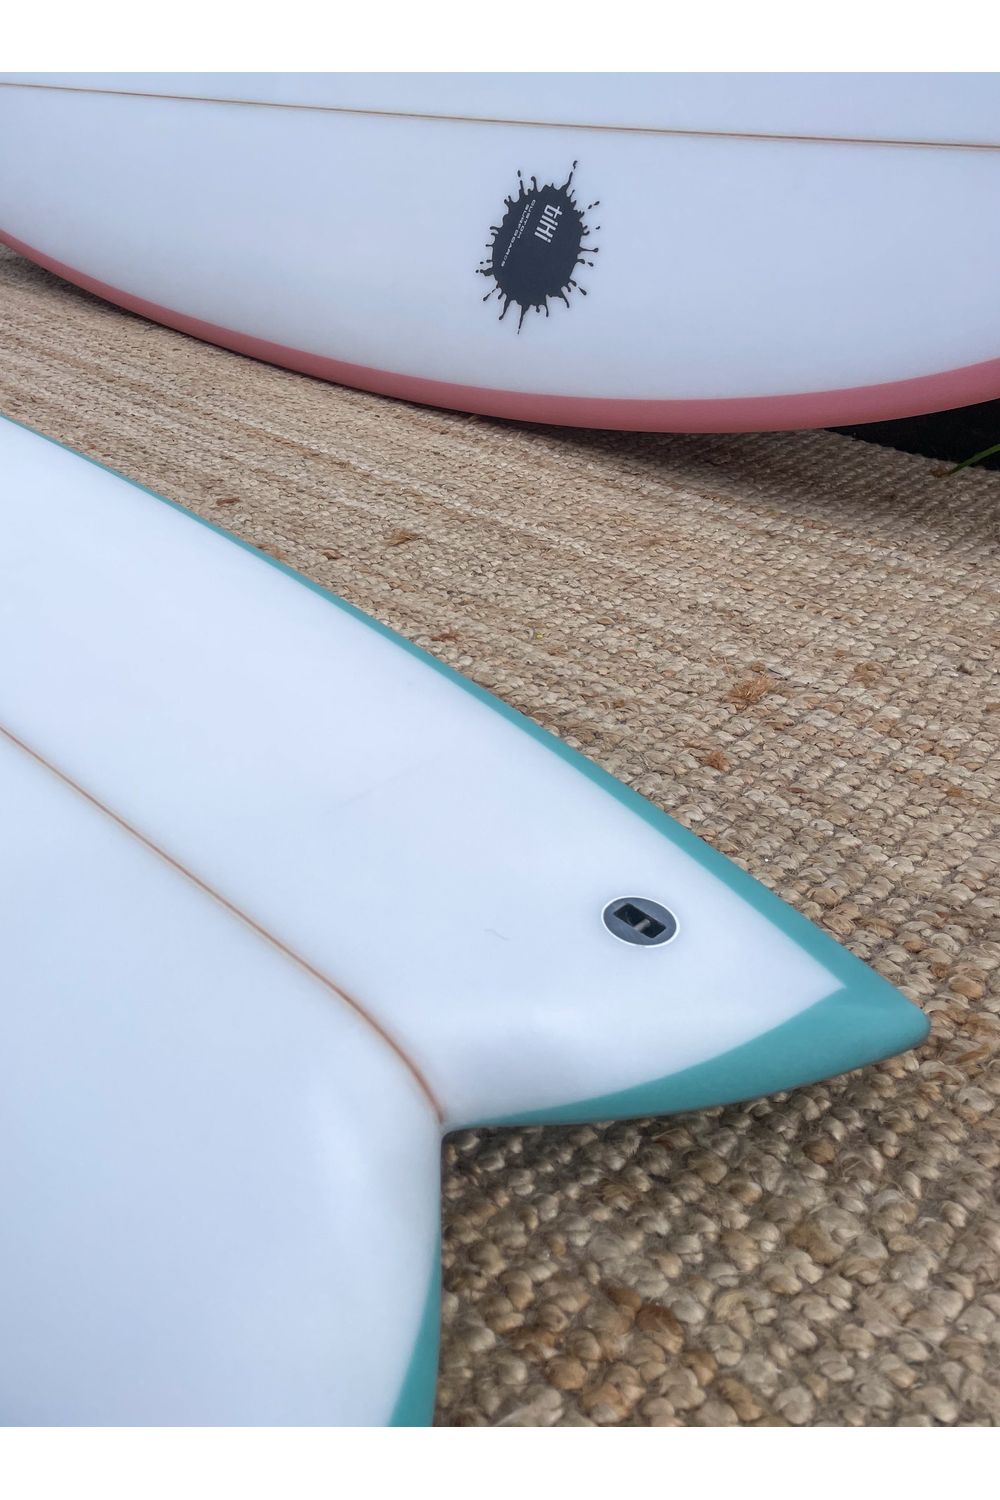 Tiki Custom Surfboard - 6'4 Parrot Twin - Ice Aqua